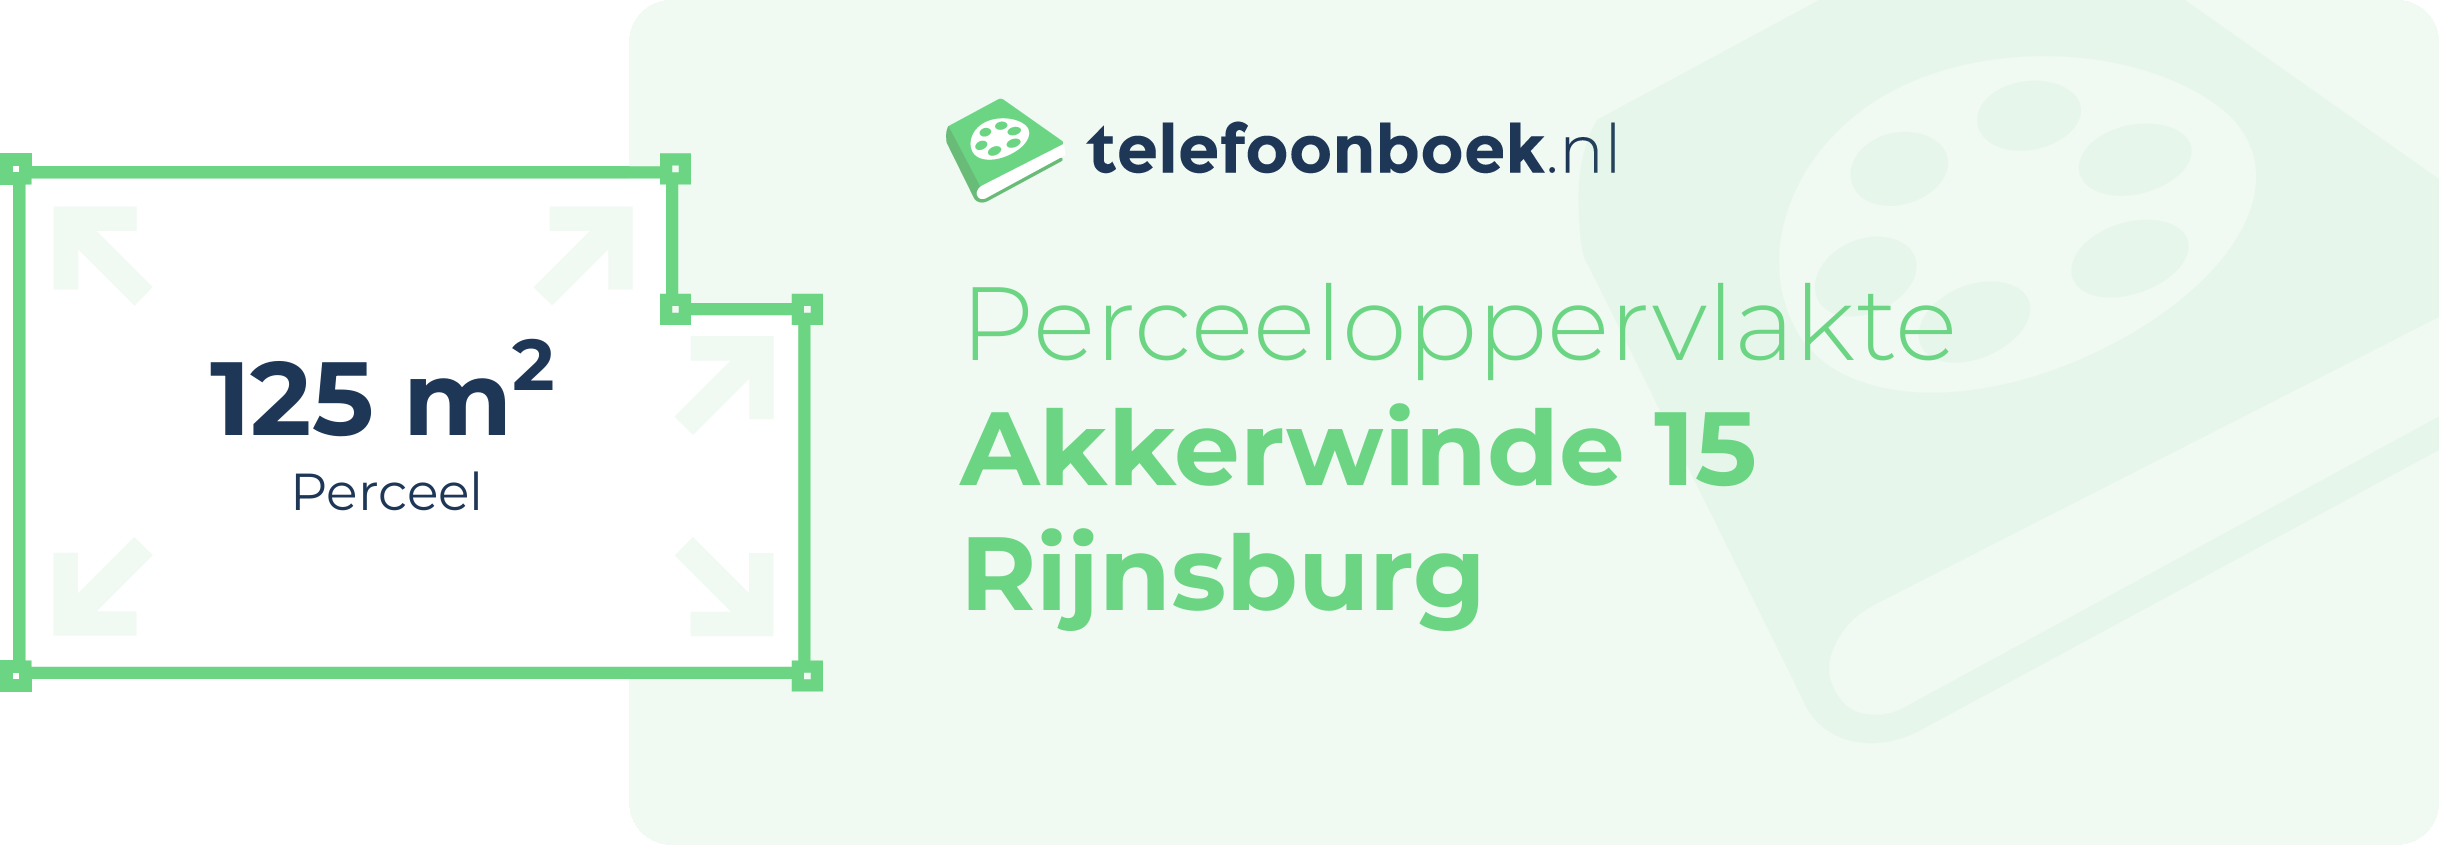 Perceeloppervlakte Akkerwinde 15 Rijnsburg